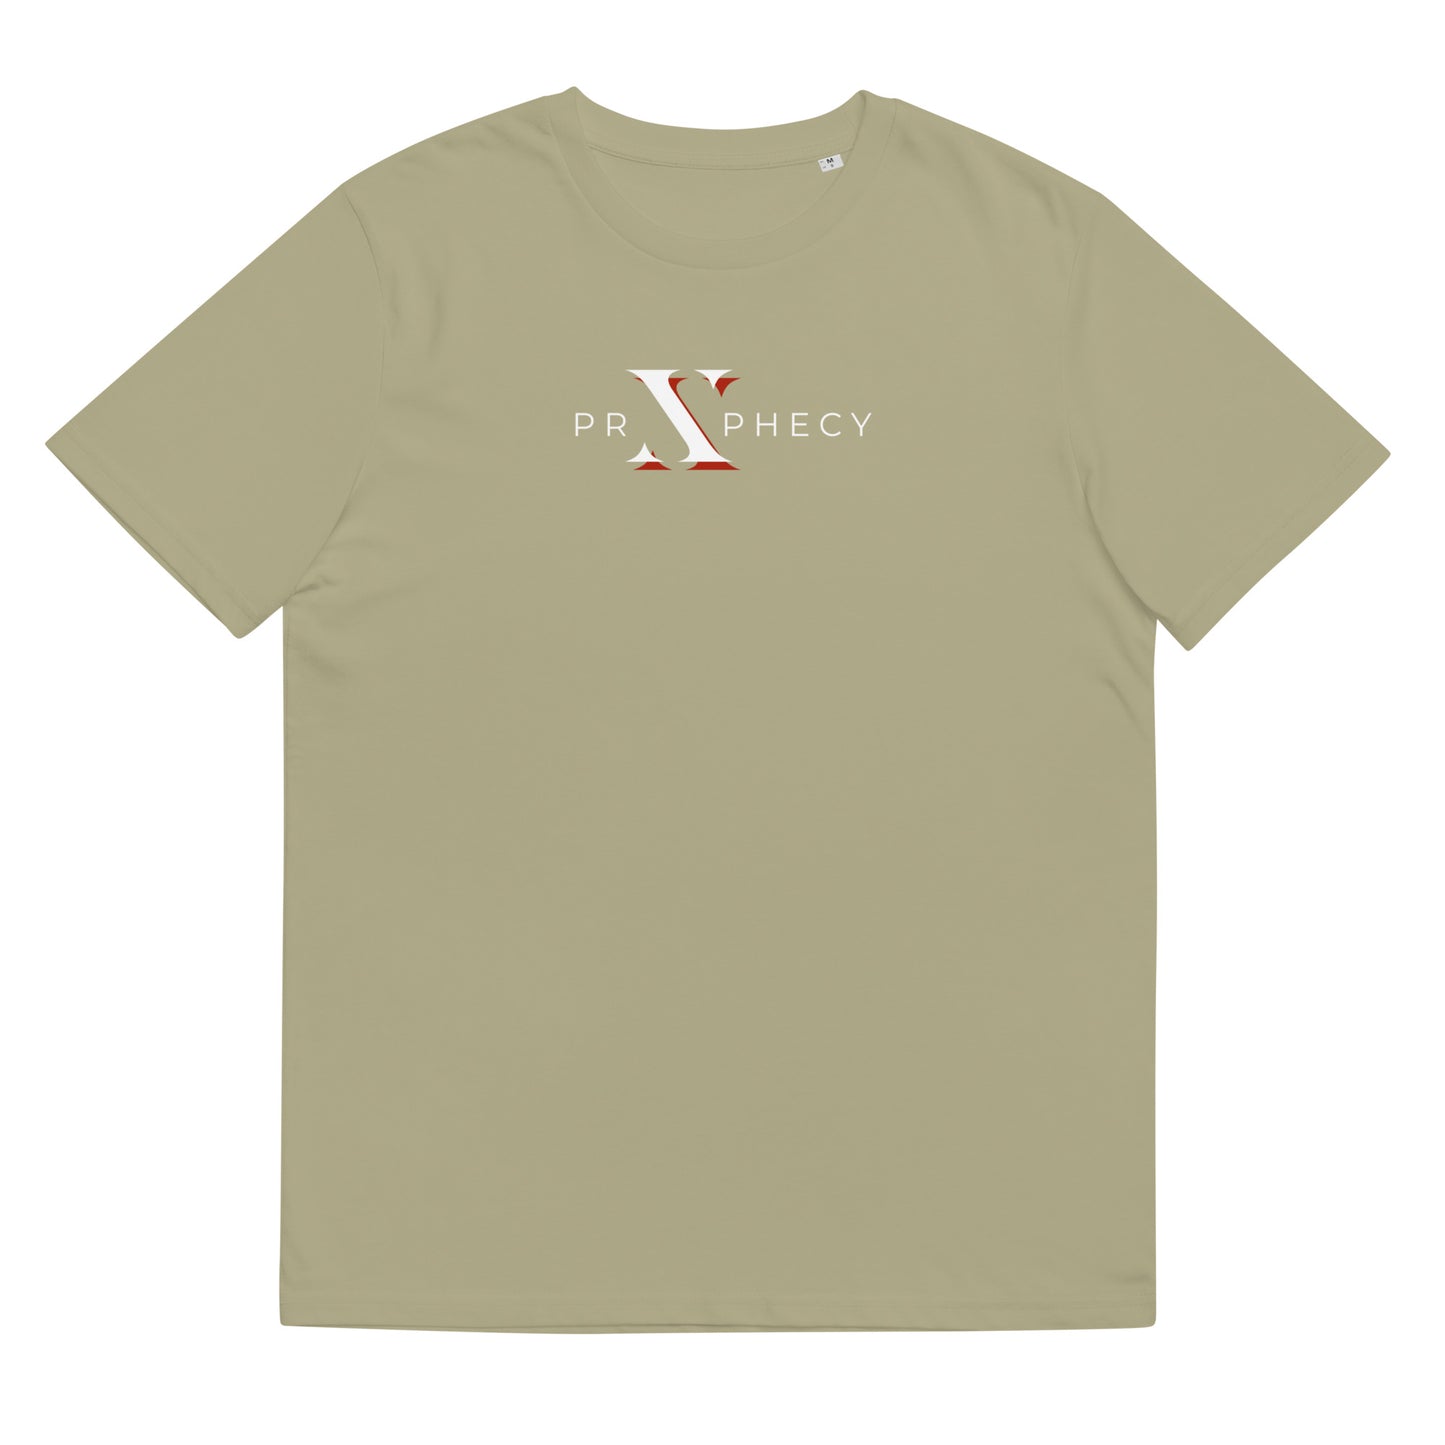 White "X" Prxphecy Unisex T-Shirt